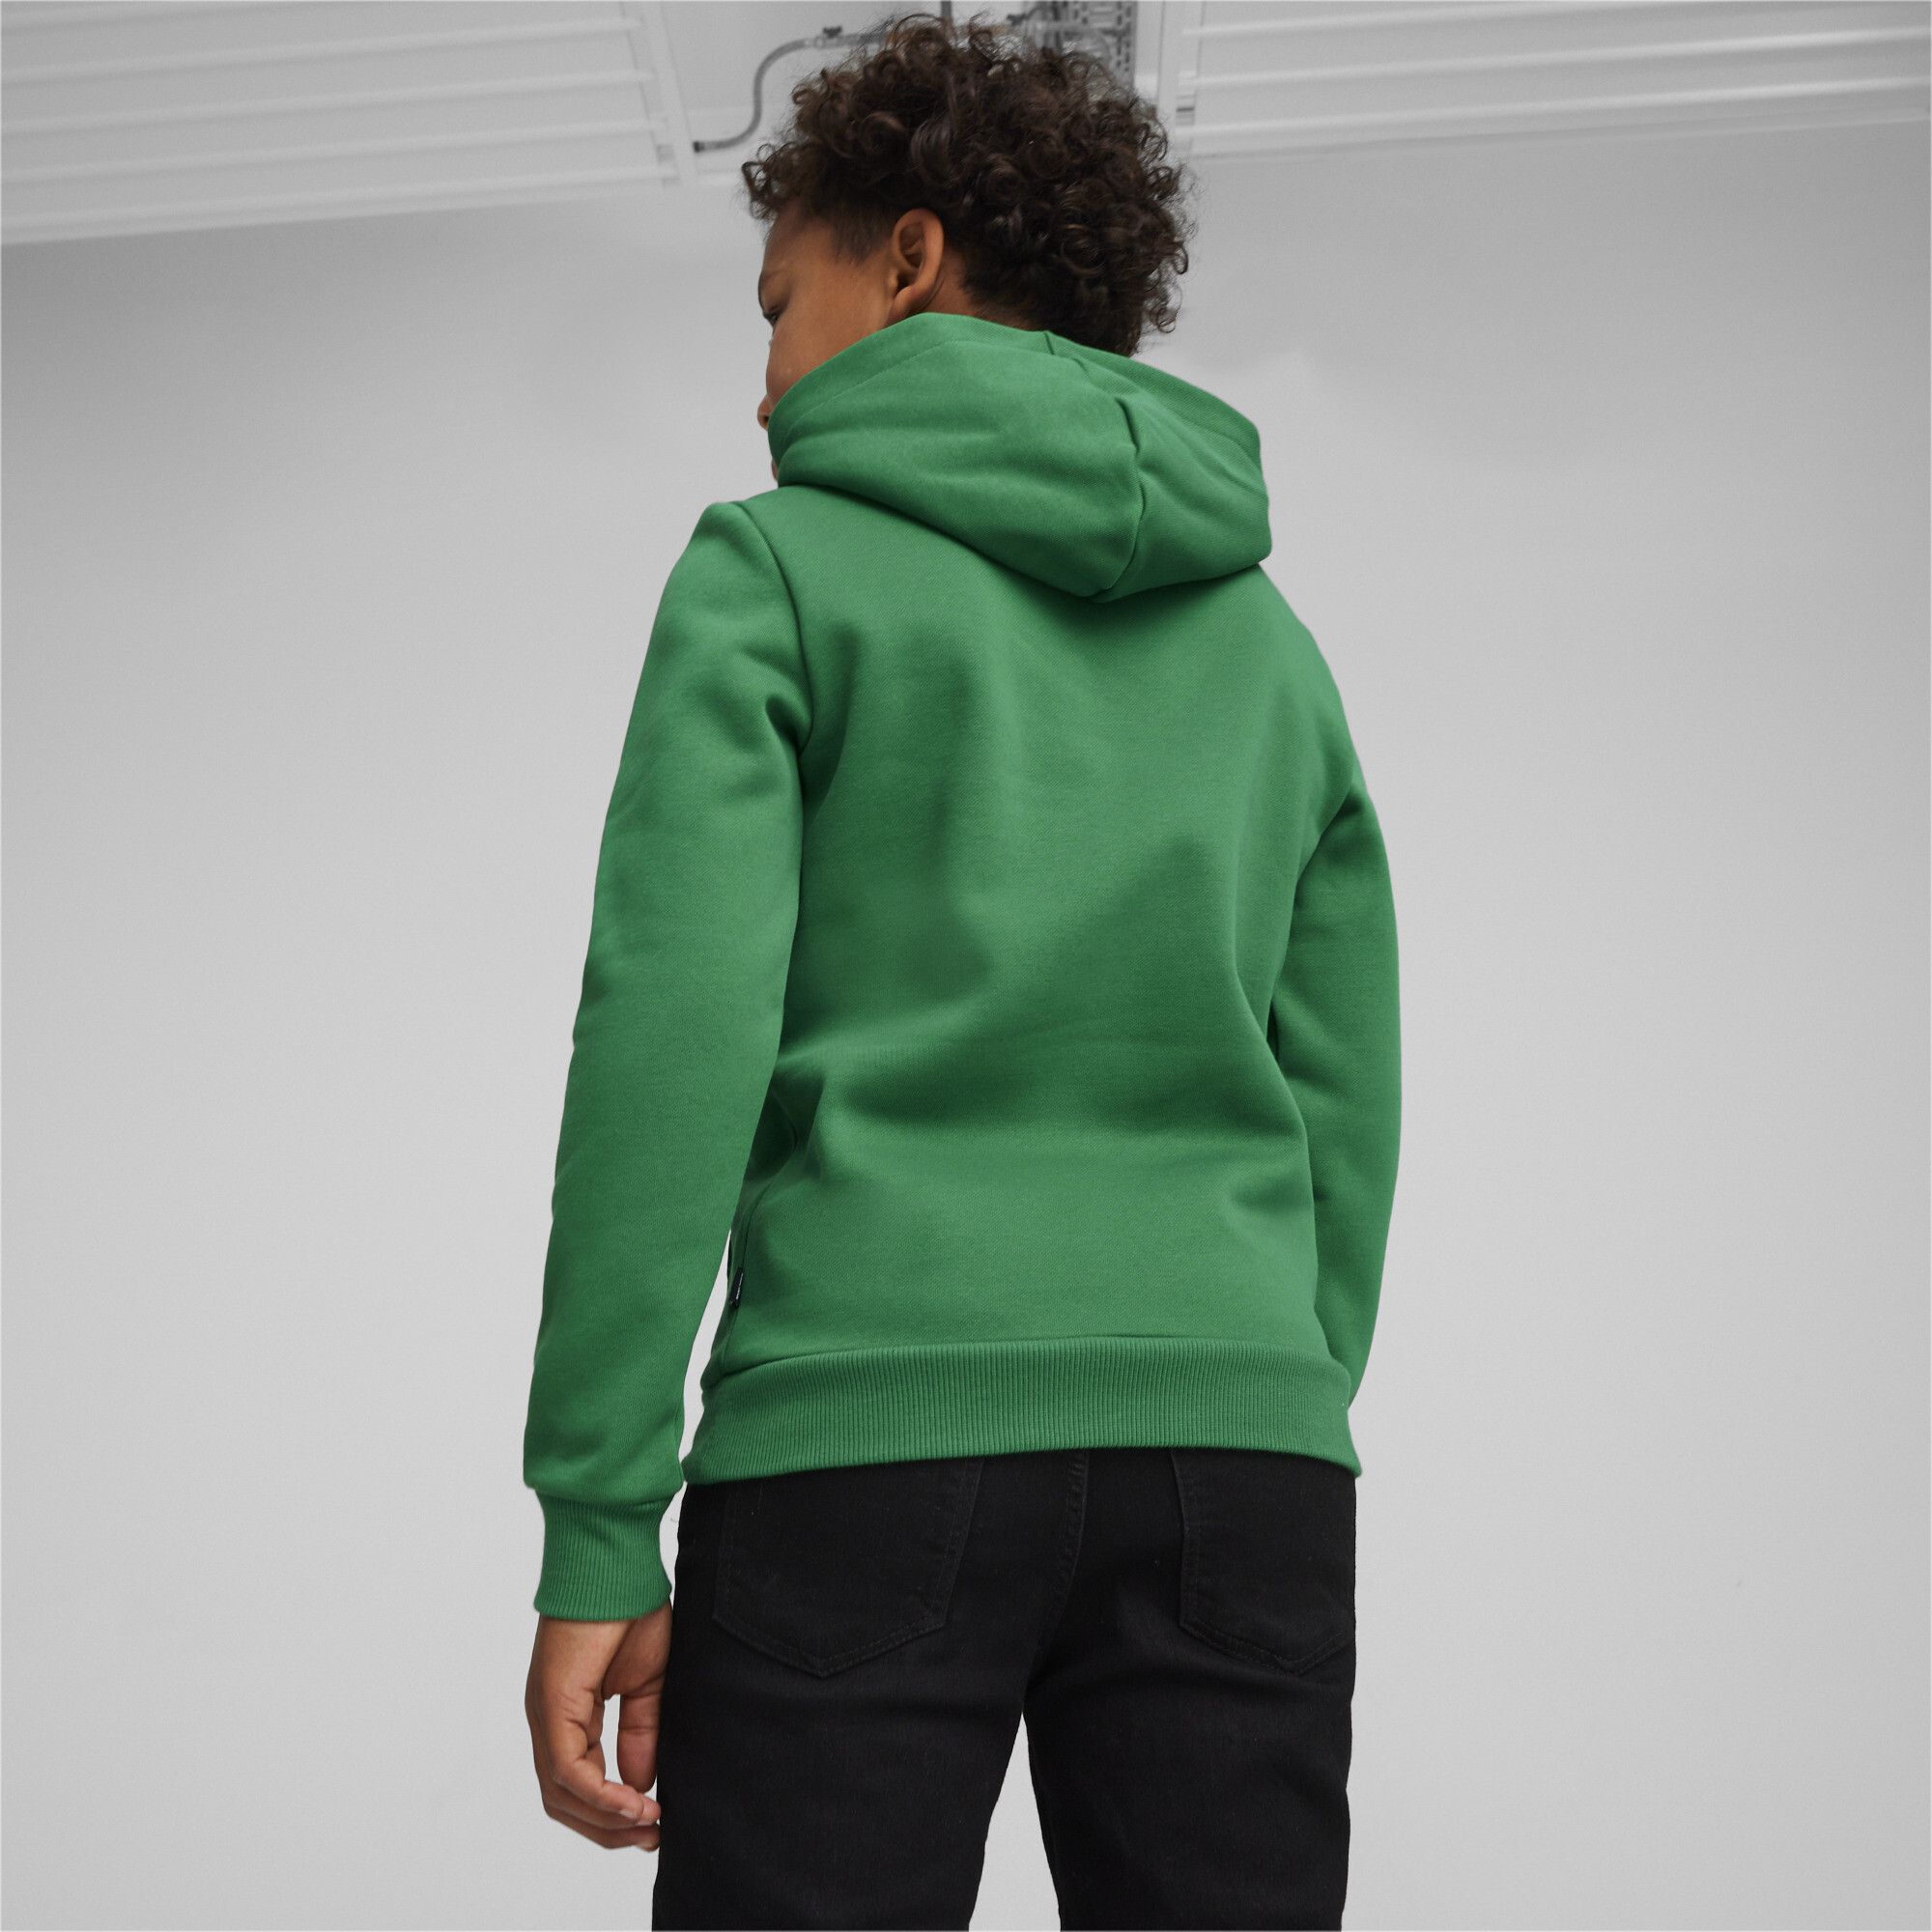 PUMA Essentials+ Two-Tone Big Logo Hoodie In Green, Size 3-4 Youth